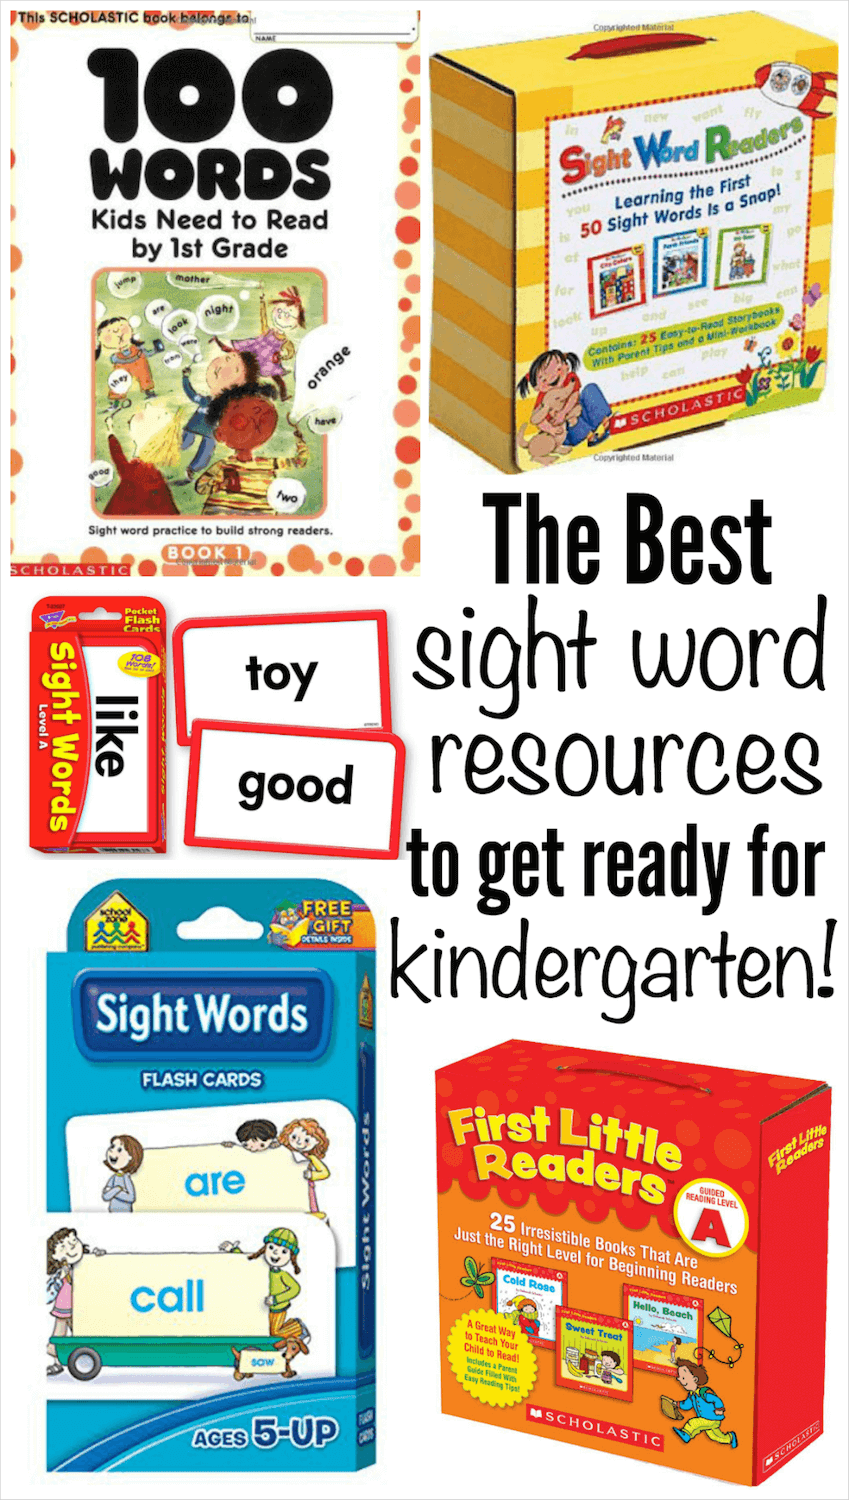 help get your child ready for kindergarten